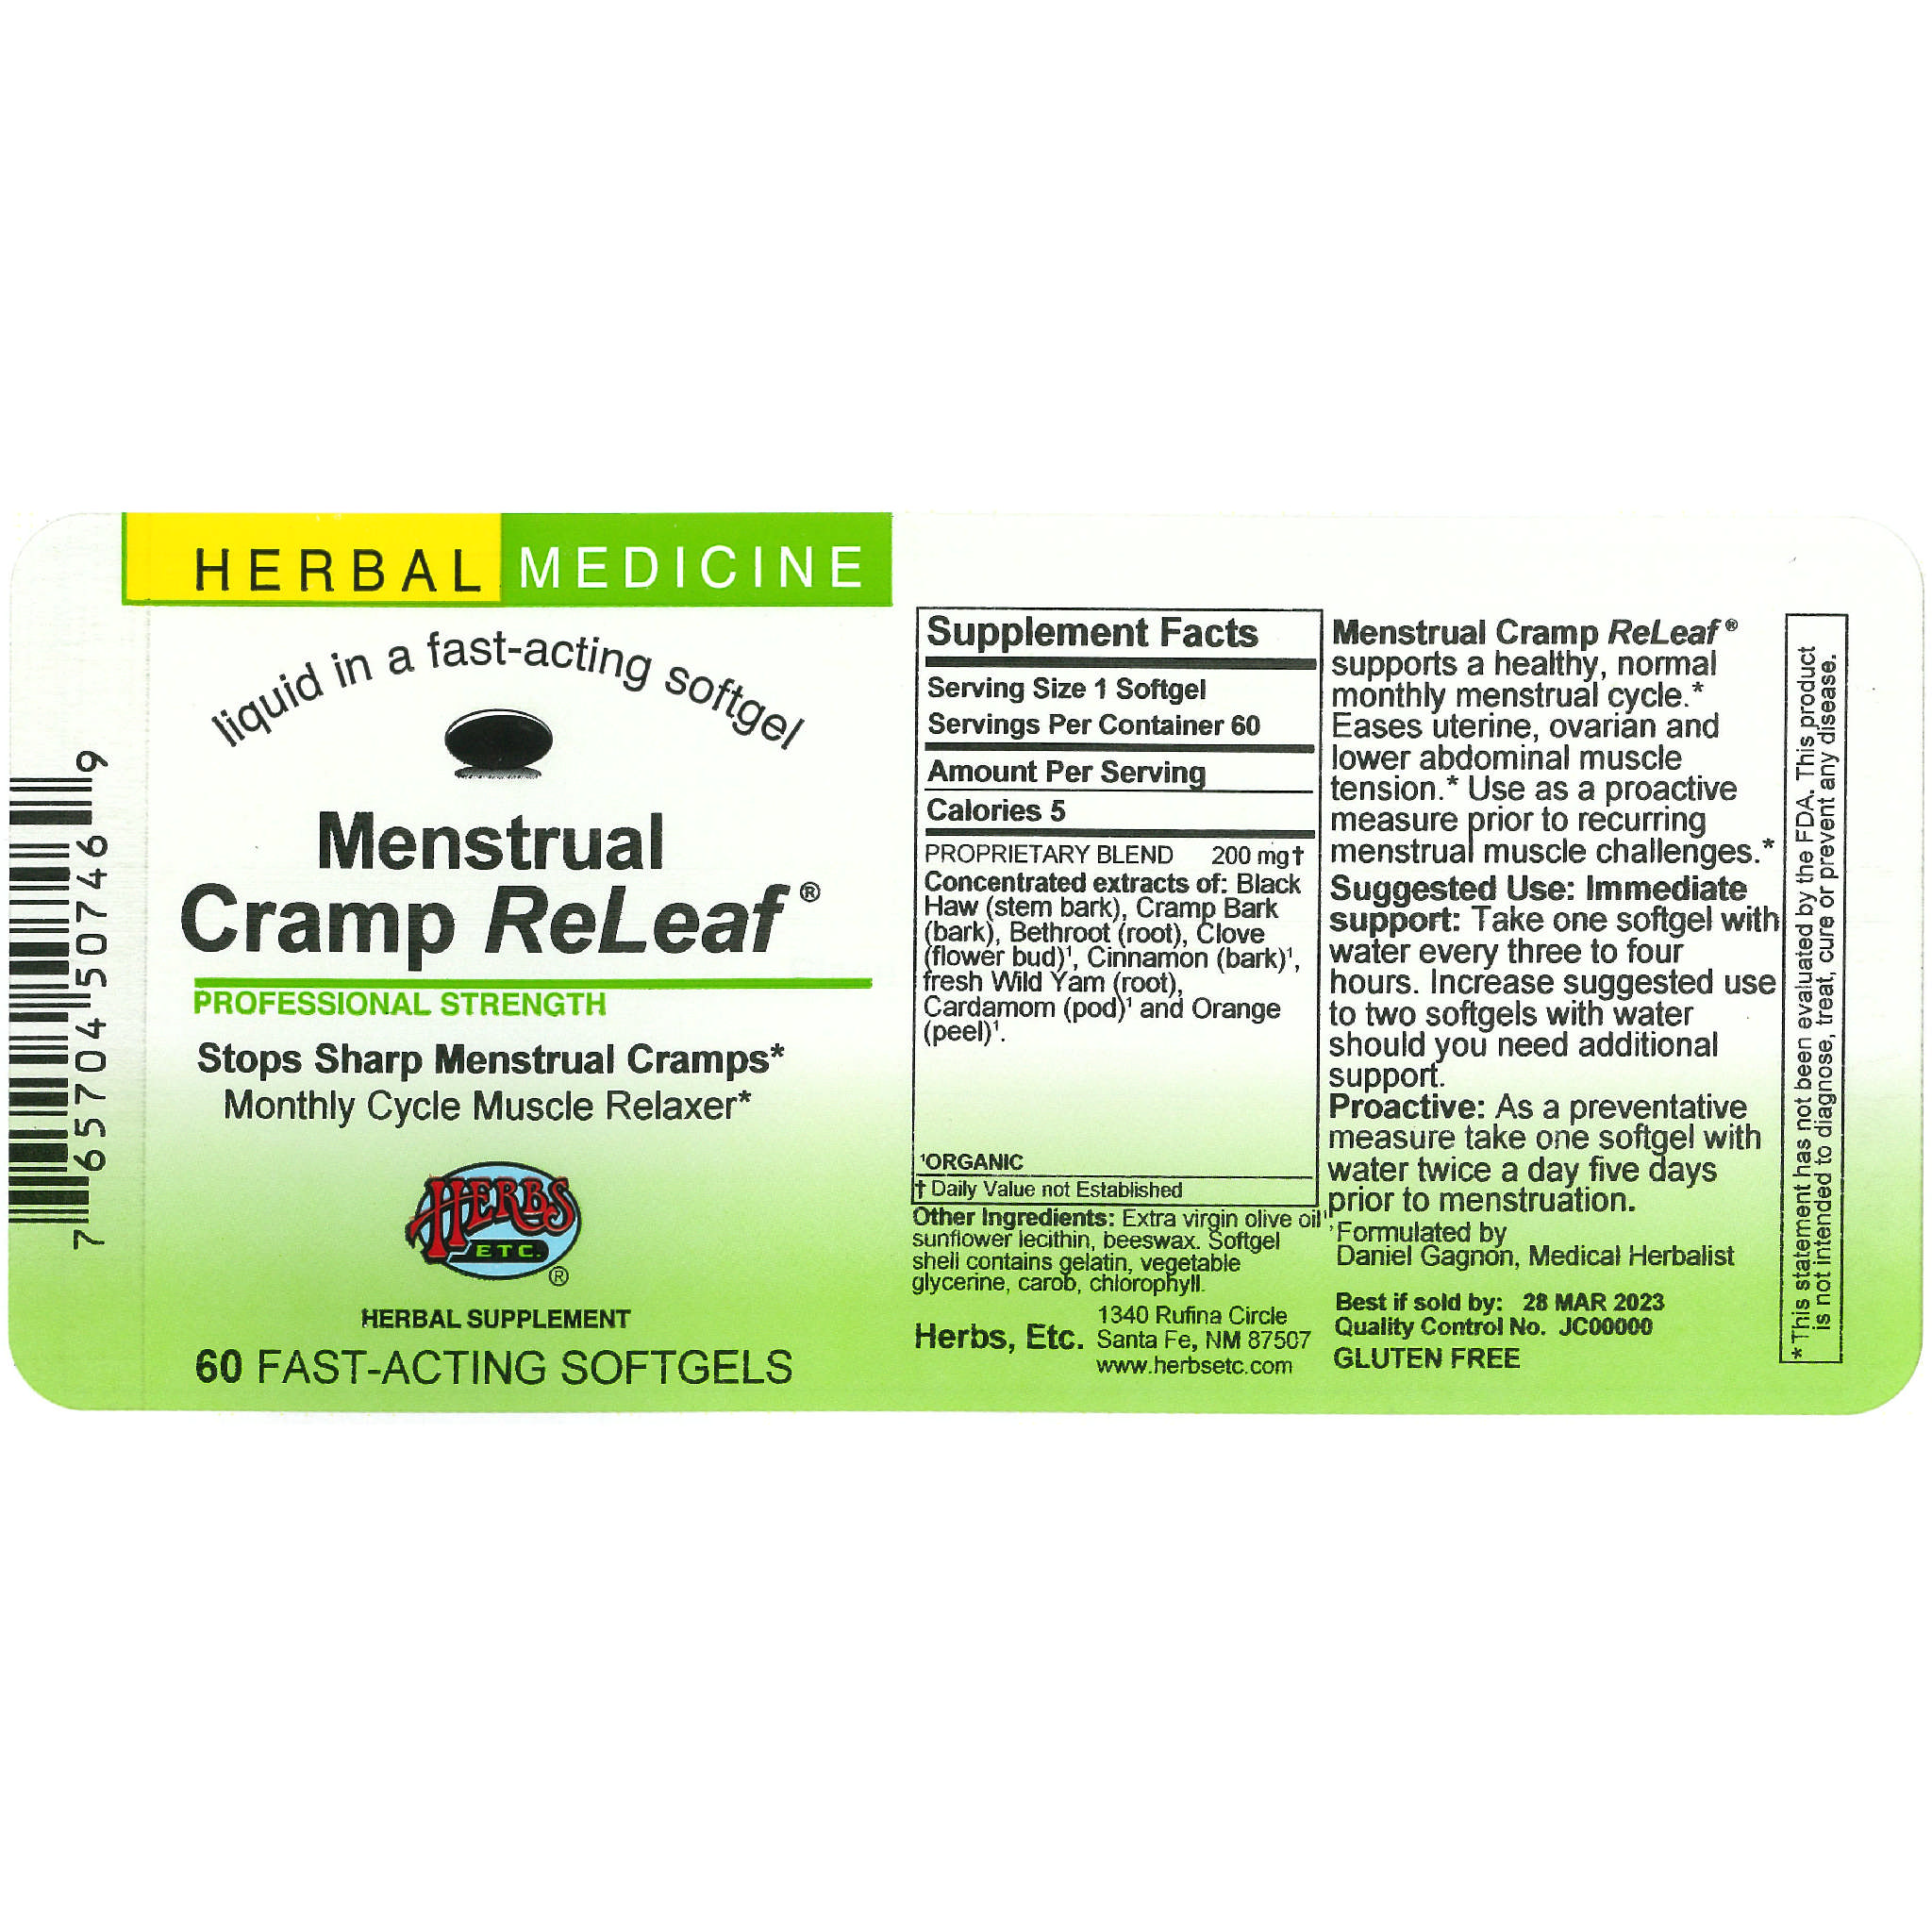 Herbs Etc - Menstrual Cramp Releaf softgel